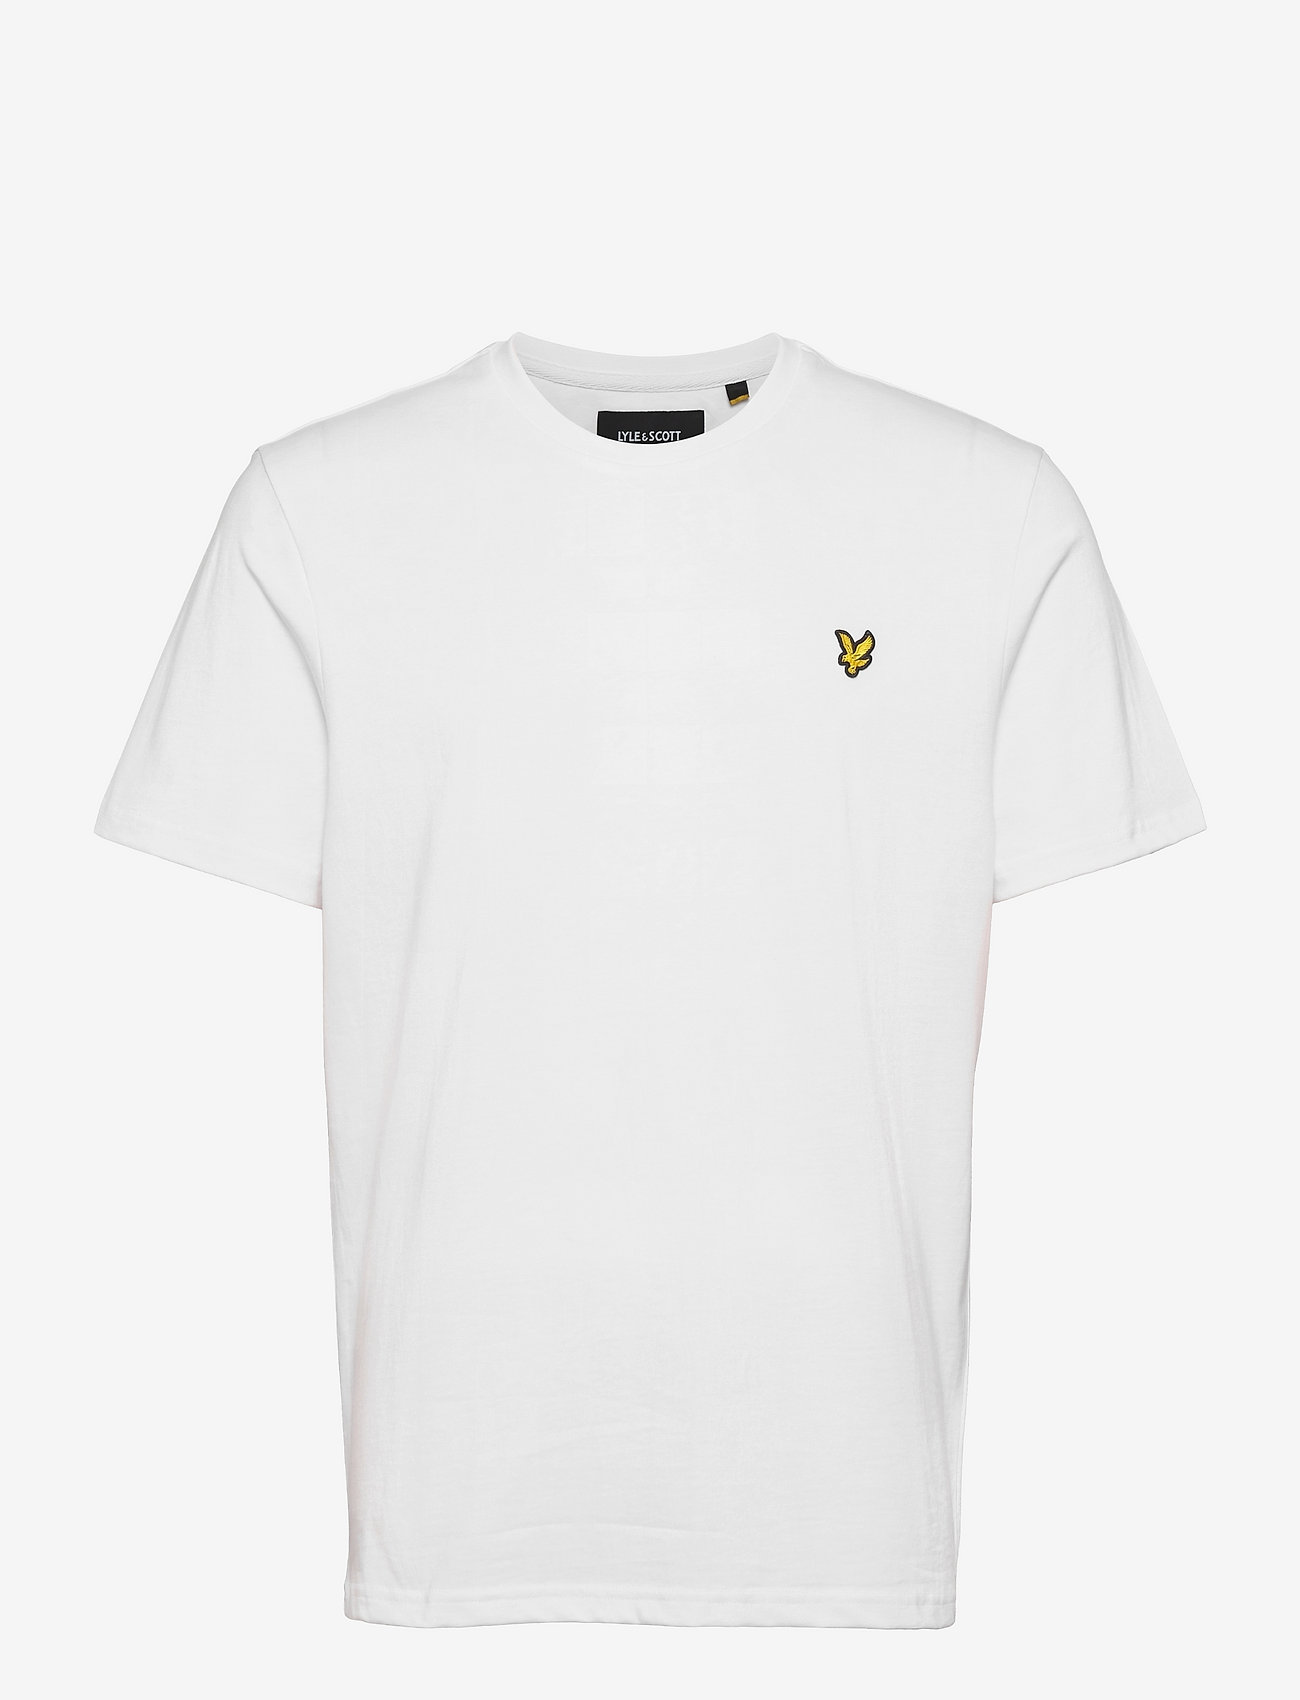 Lyle & Scott - Plain T-Shirt - korte mouwen - white - 1